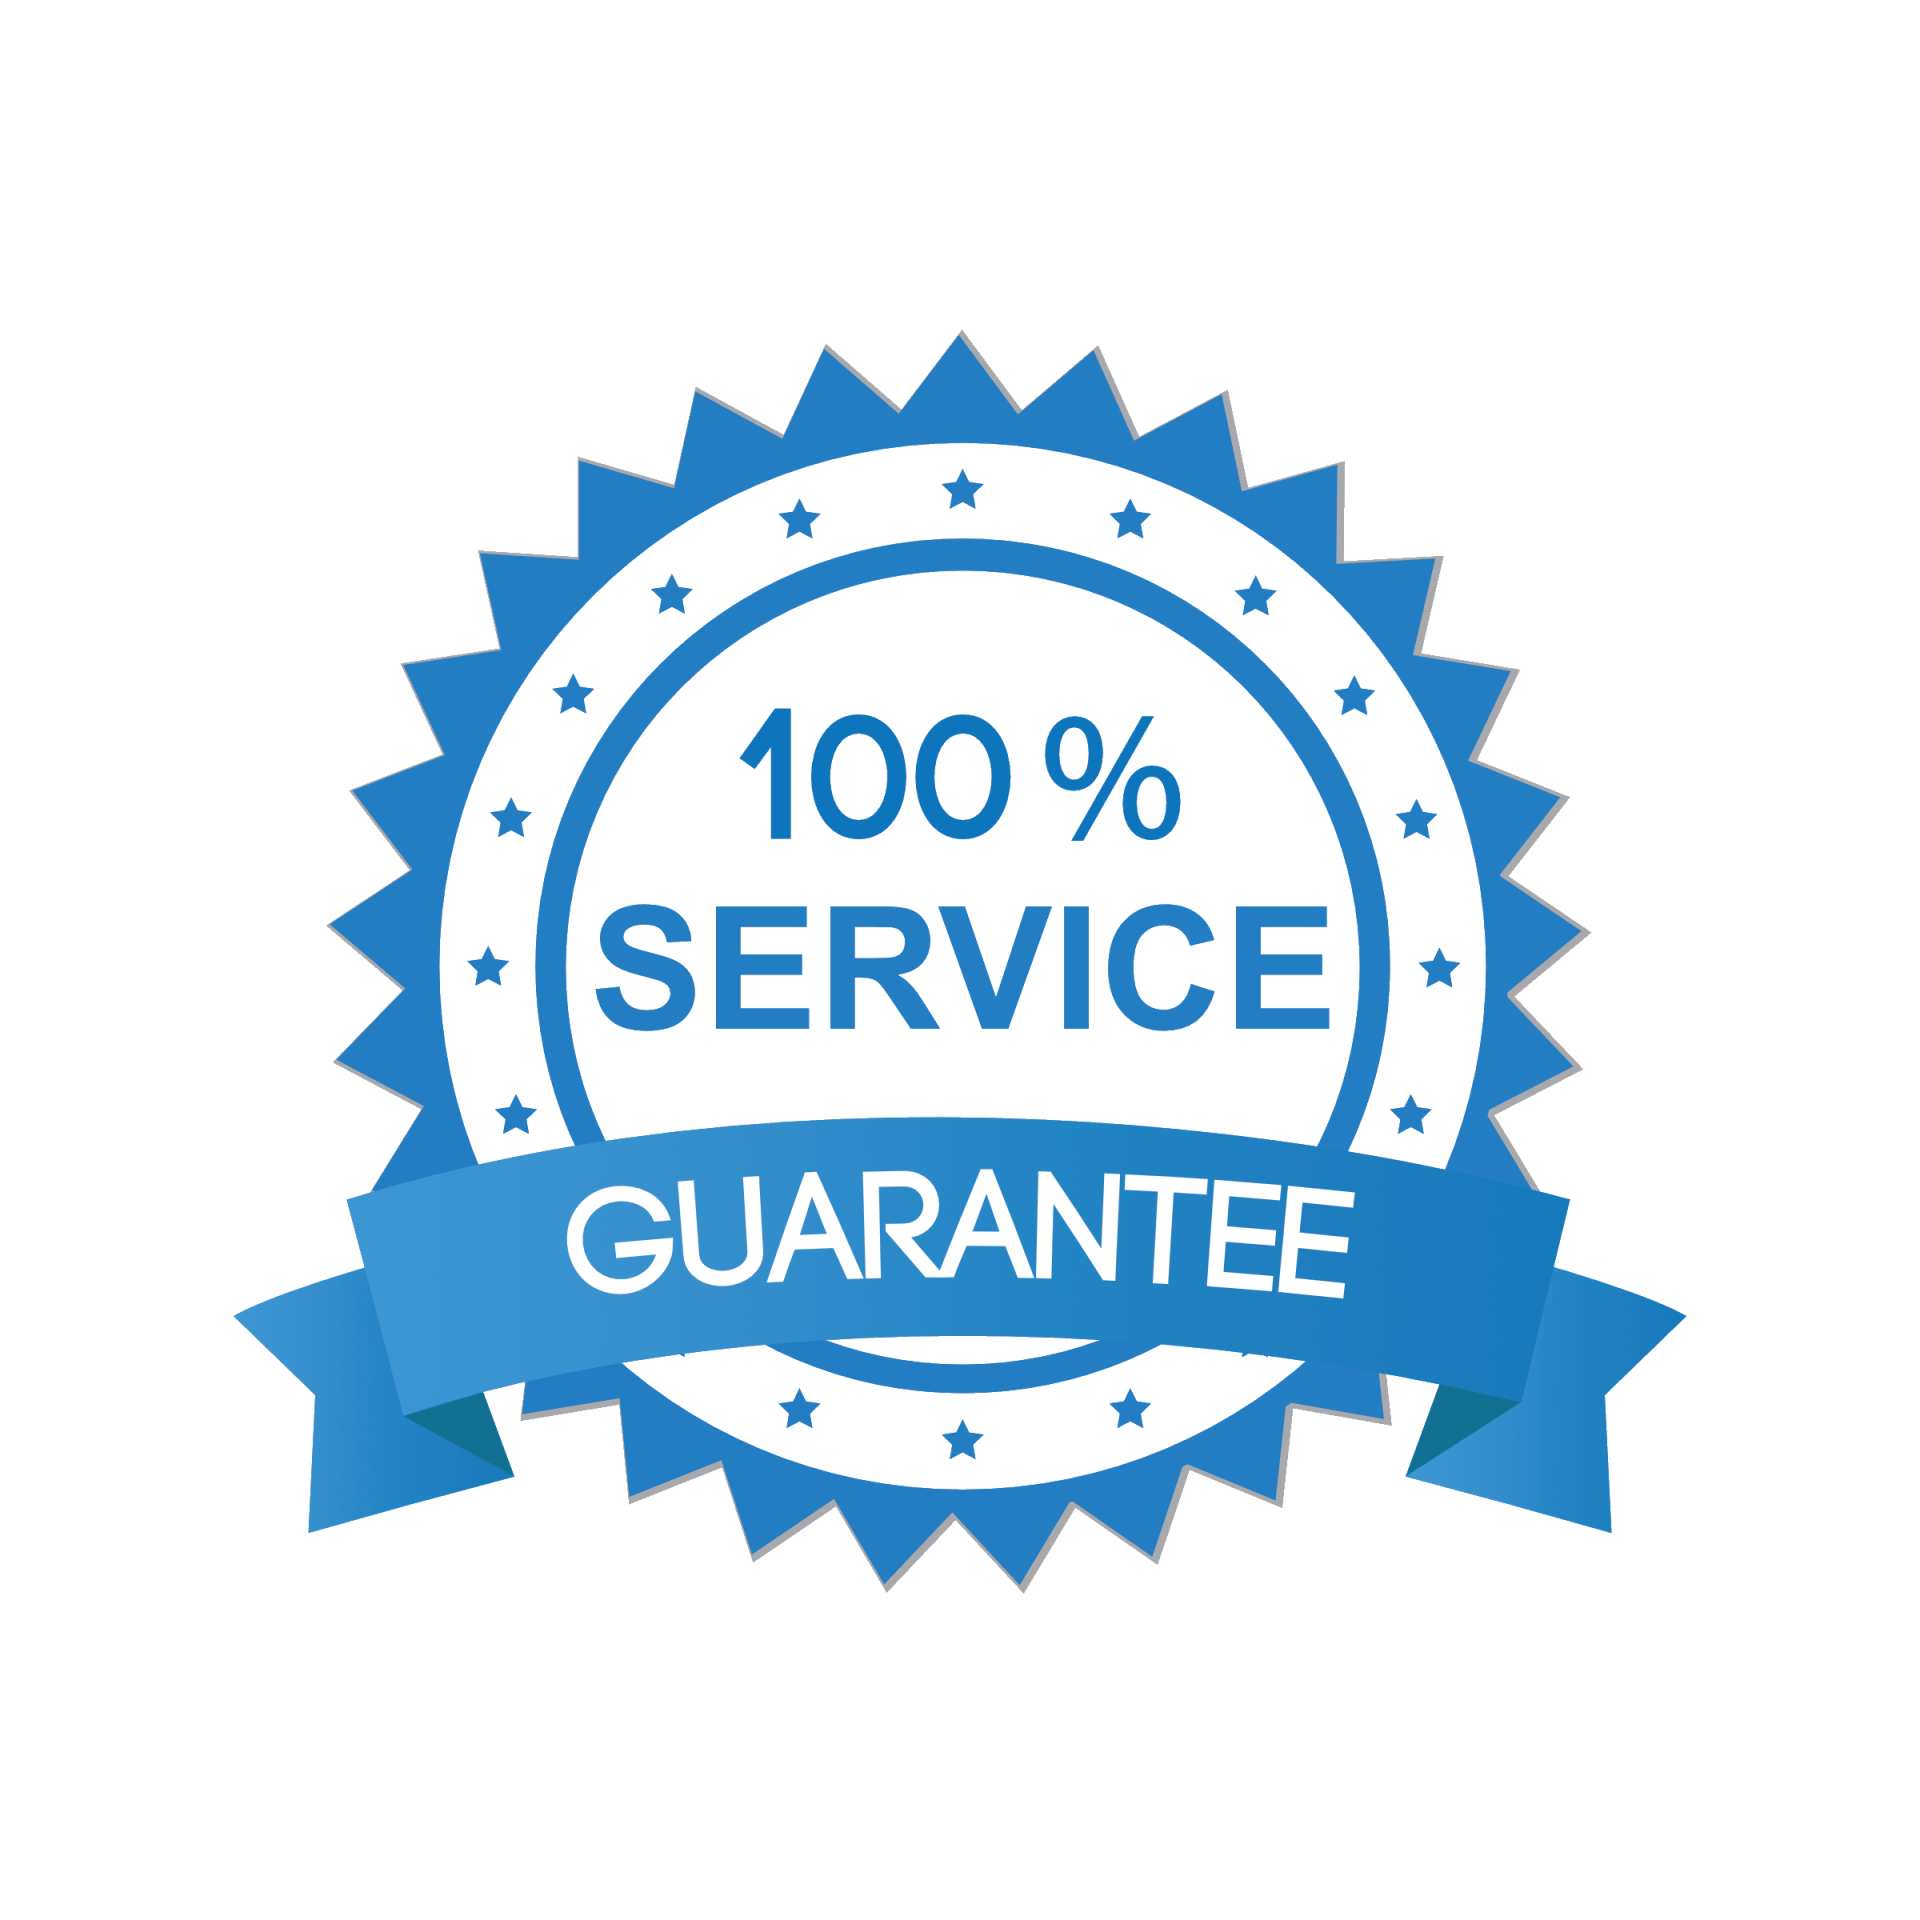 100% Service Guarantee